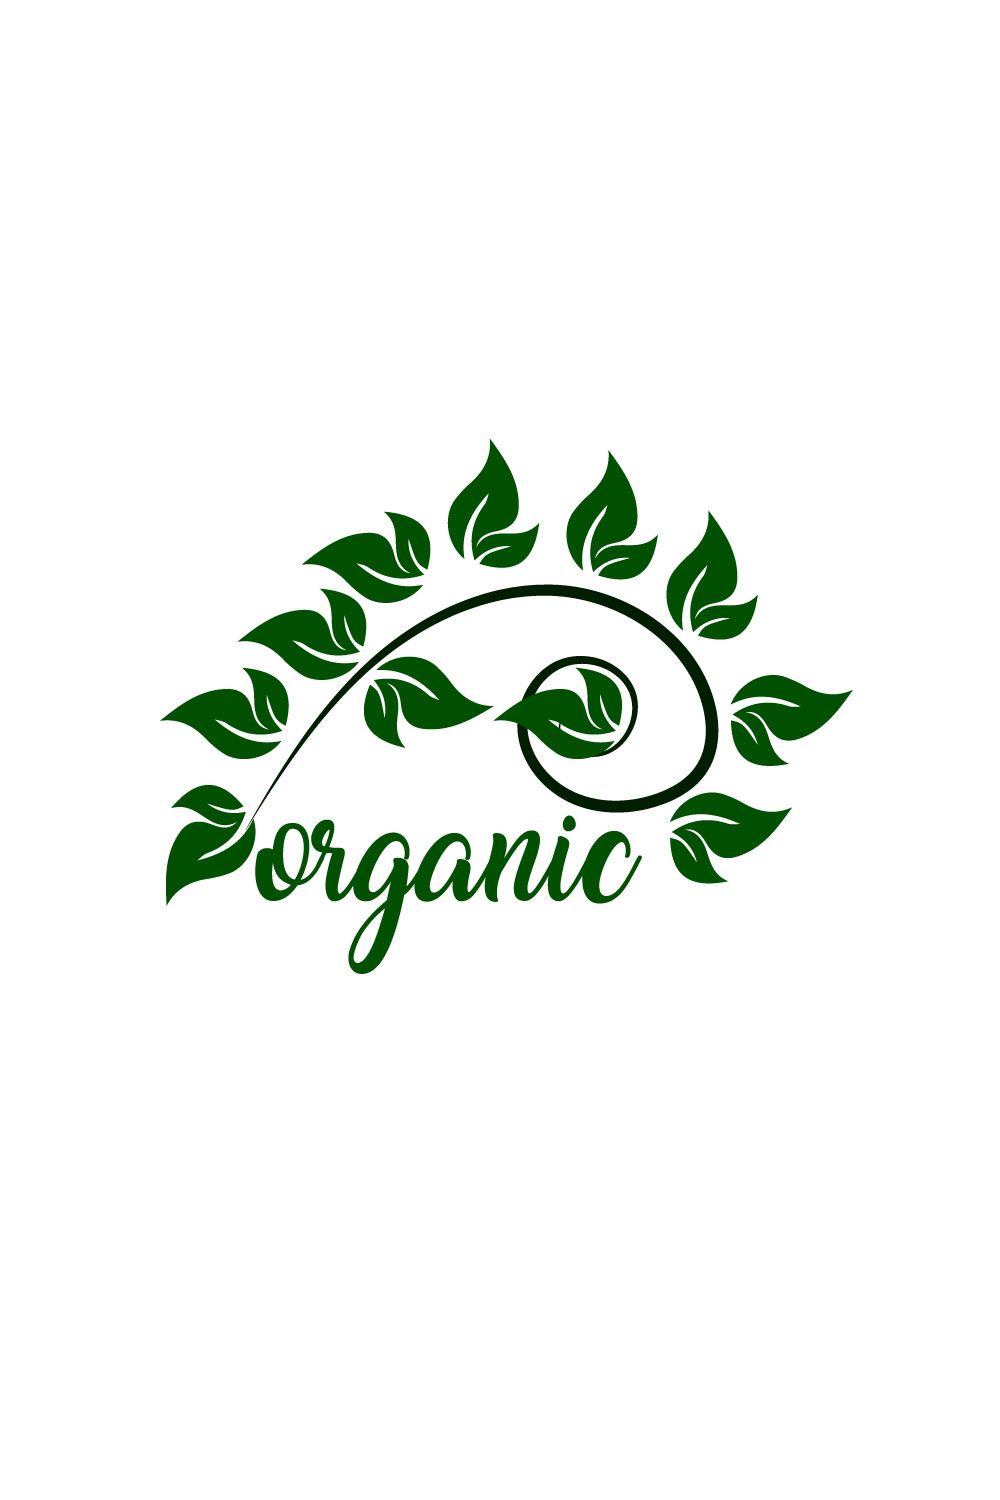 Free organic beauty logo pinterest preview image.